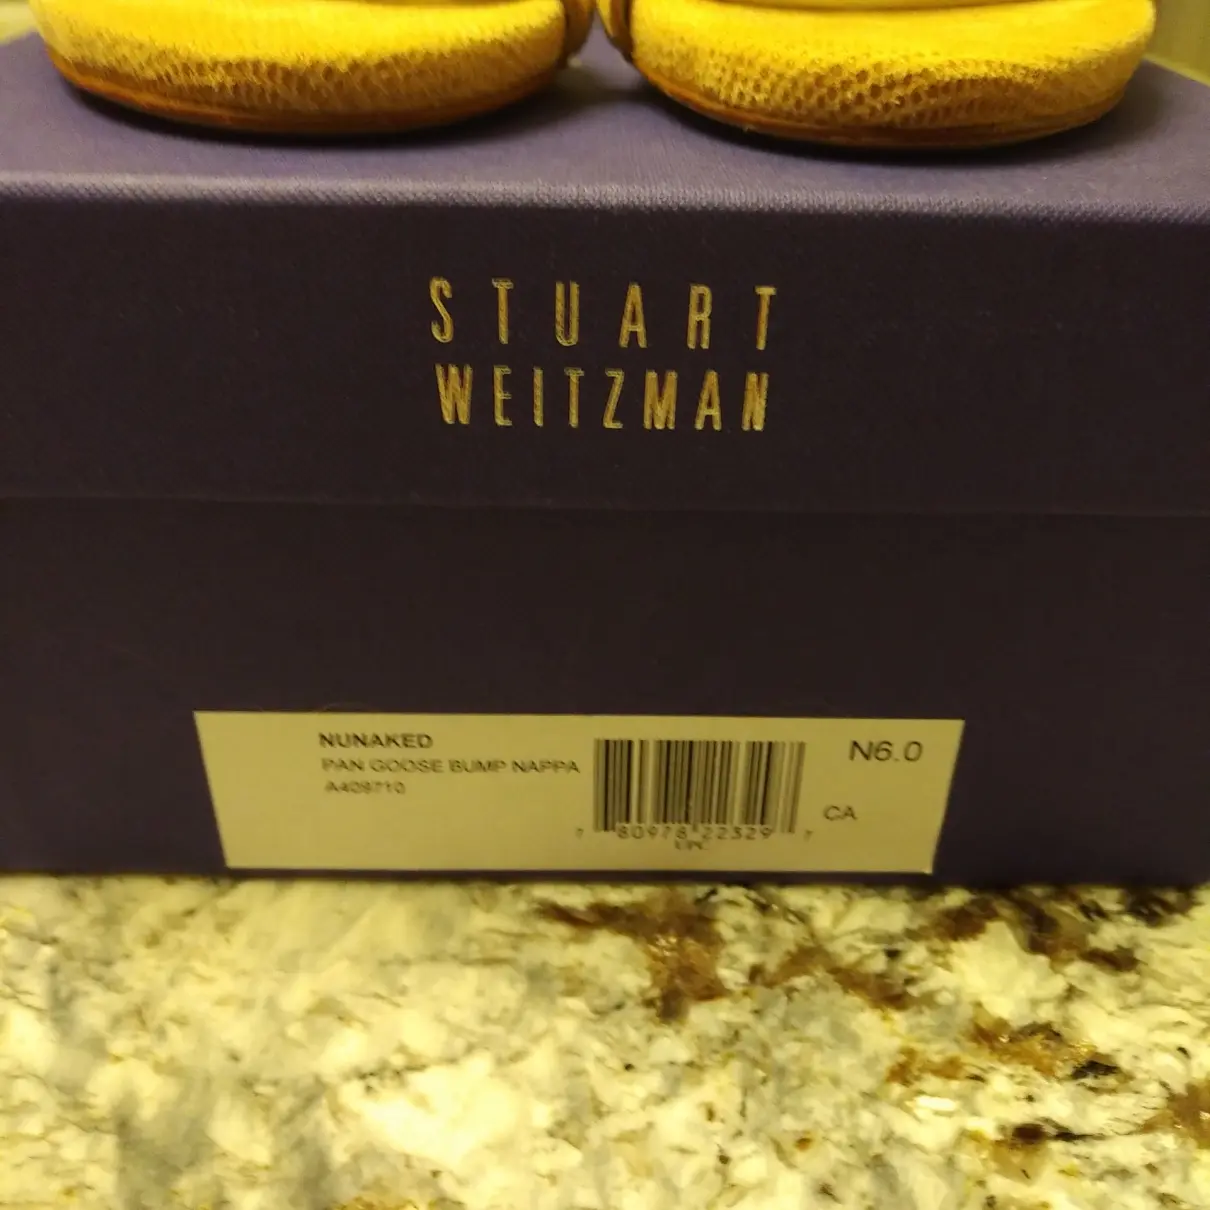 Leather sandal Stuart Weitzman